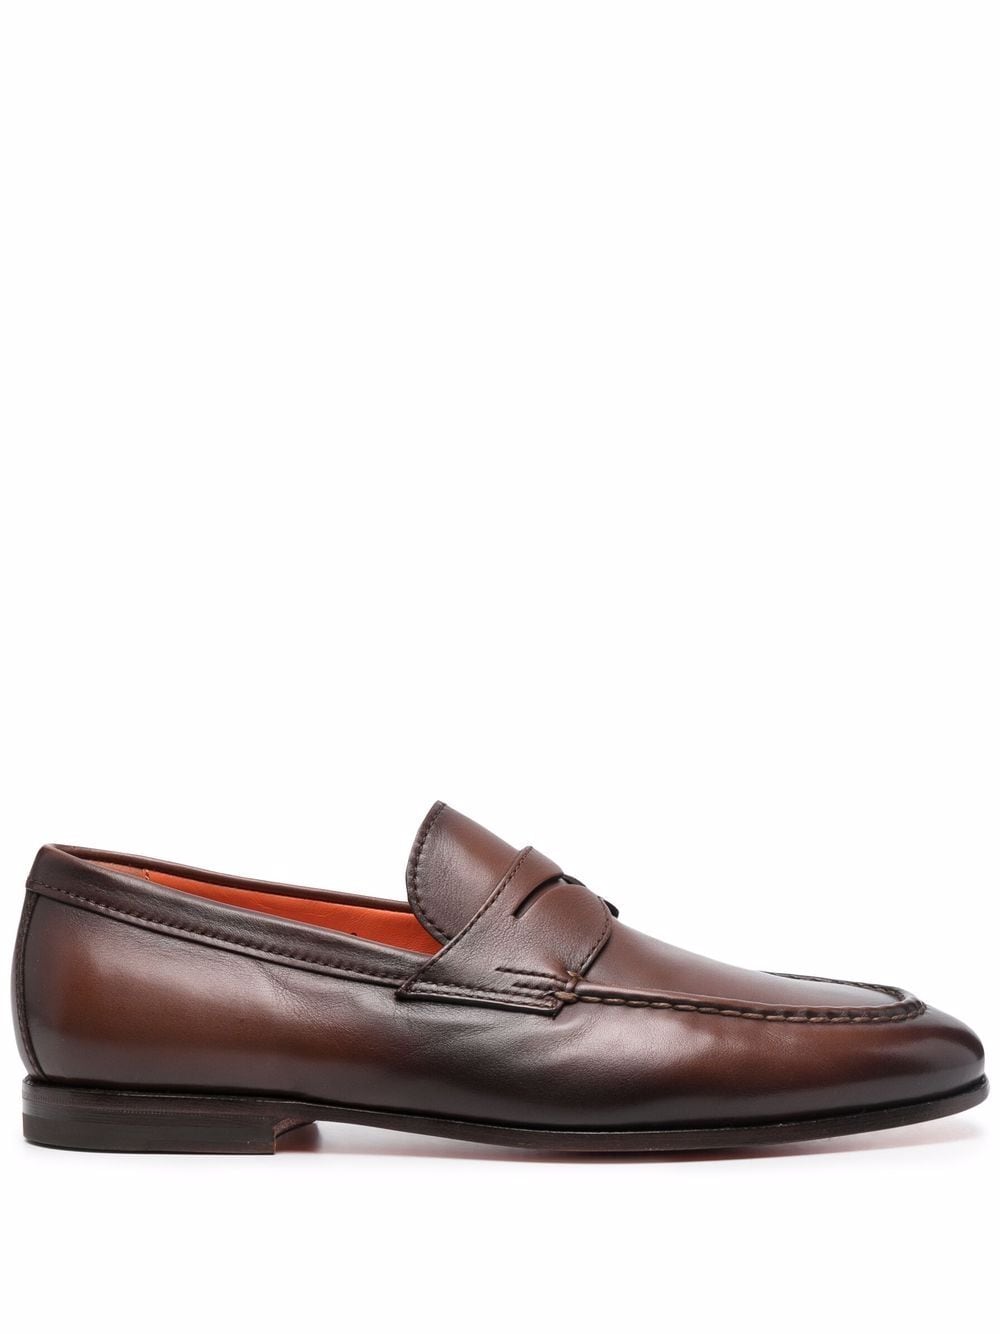 Santoni leather flat loafers - Brown von Santoni